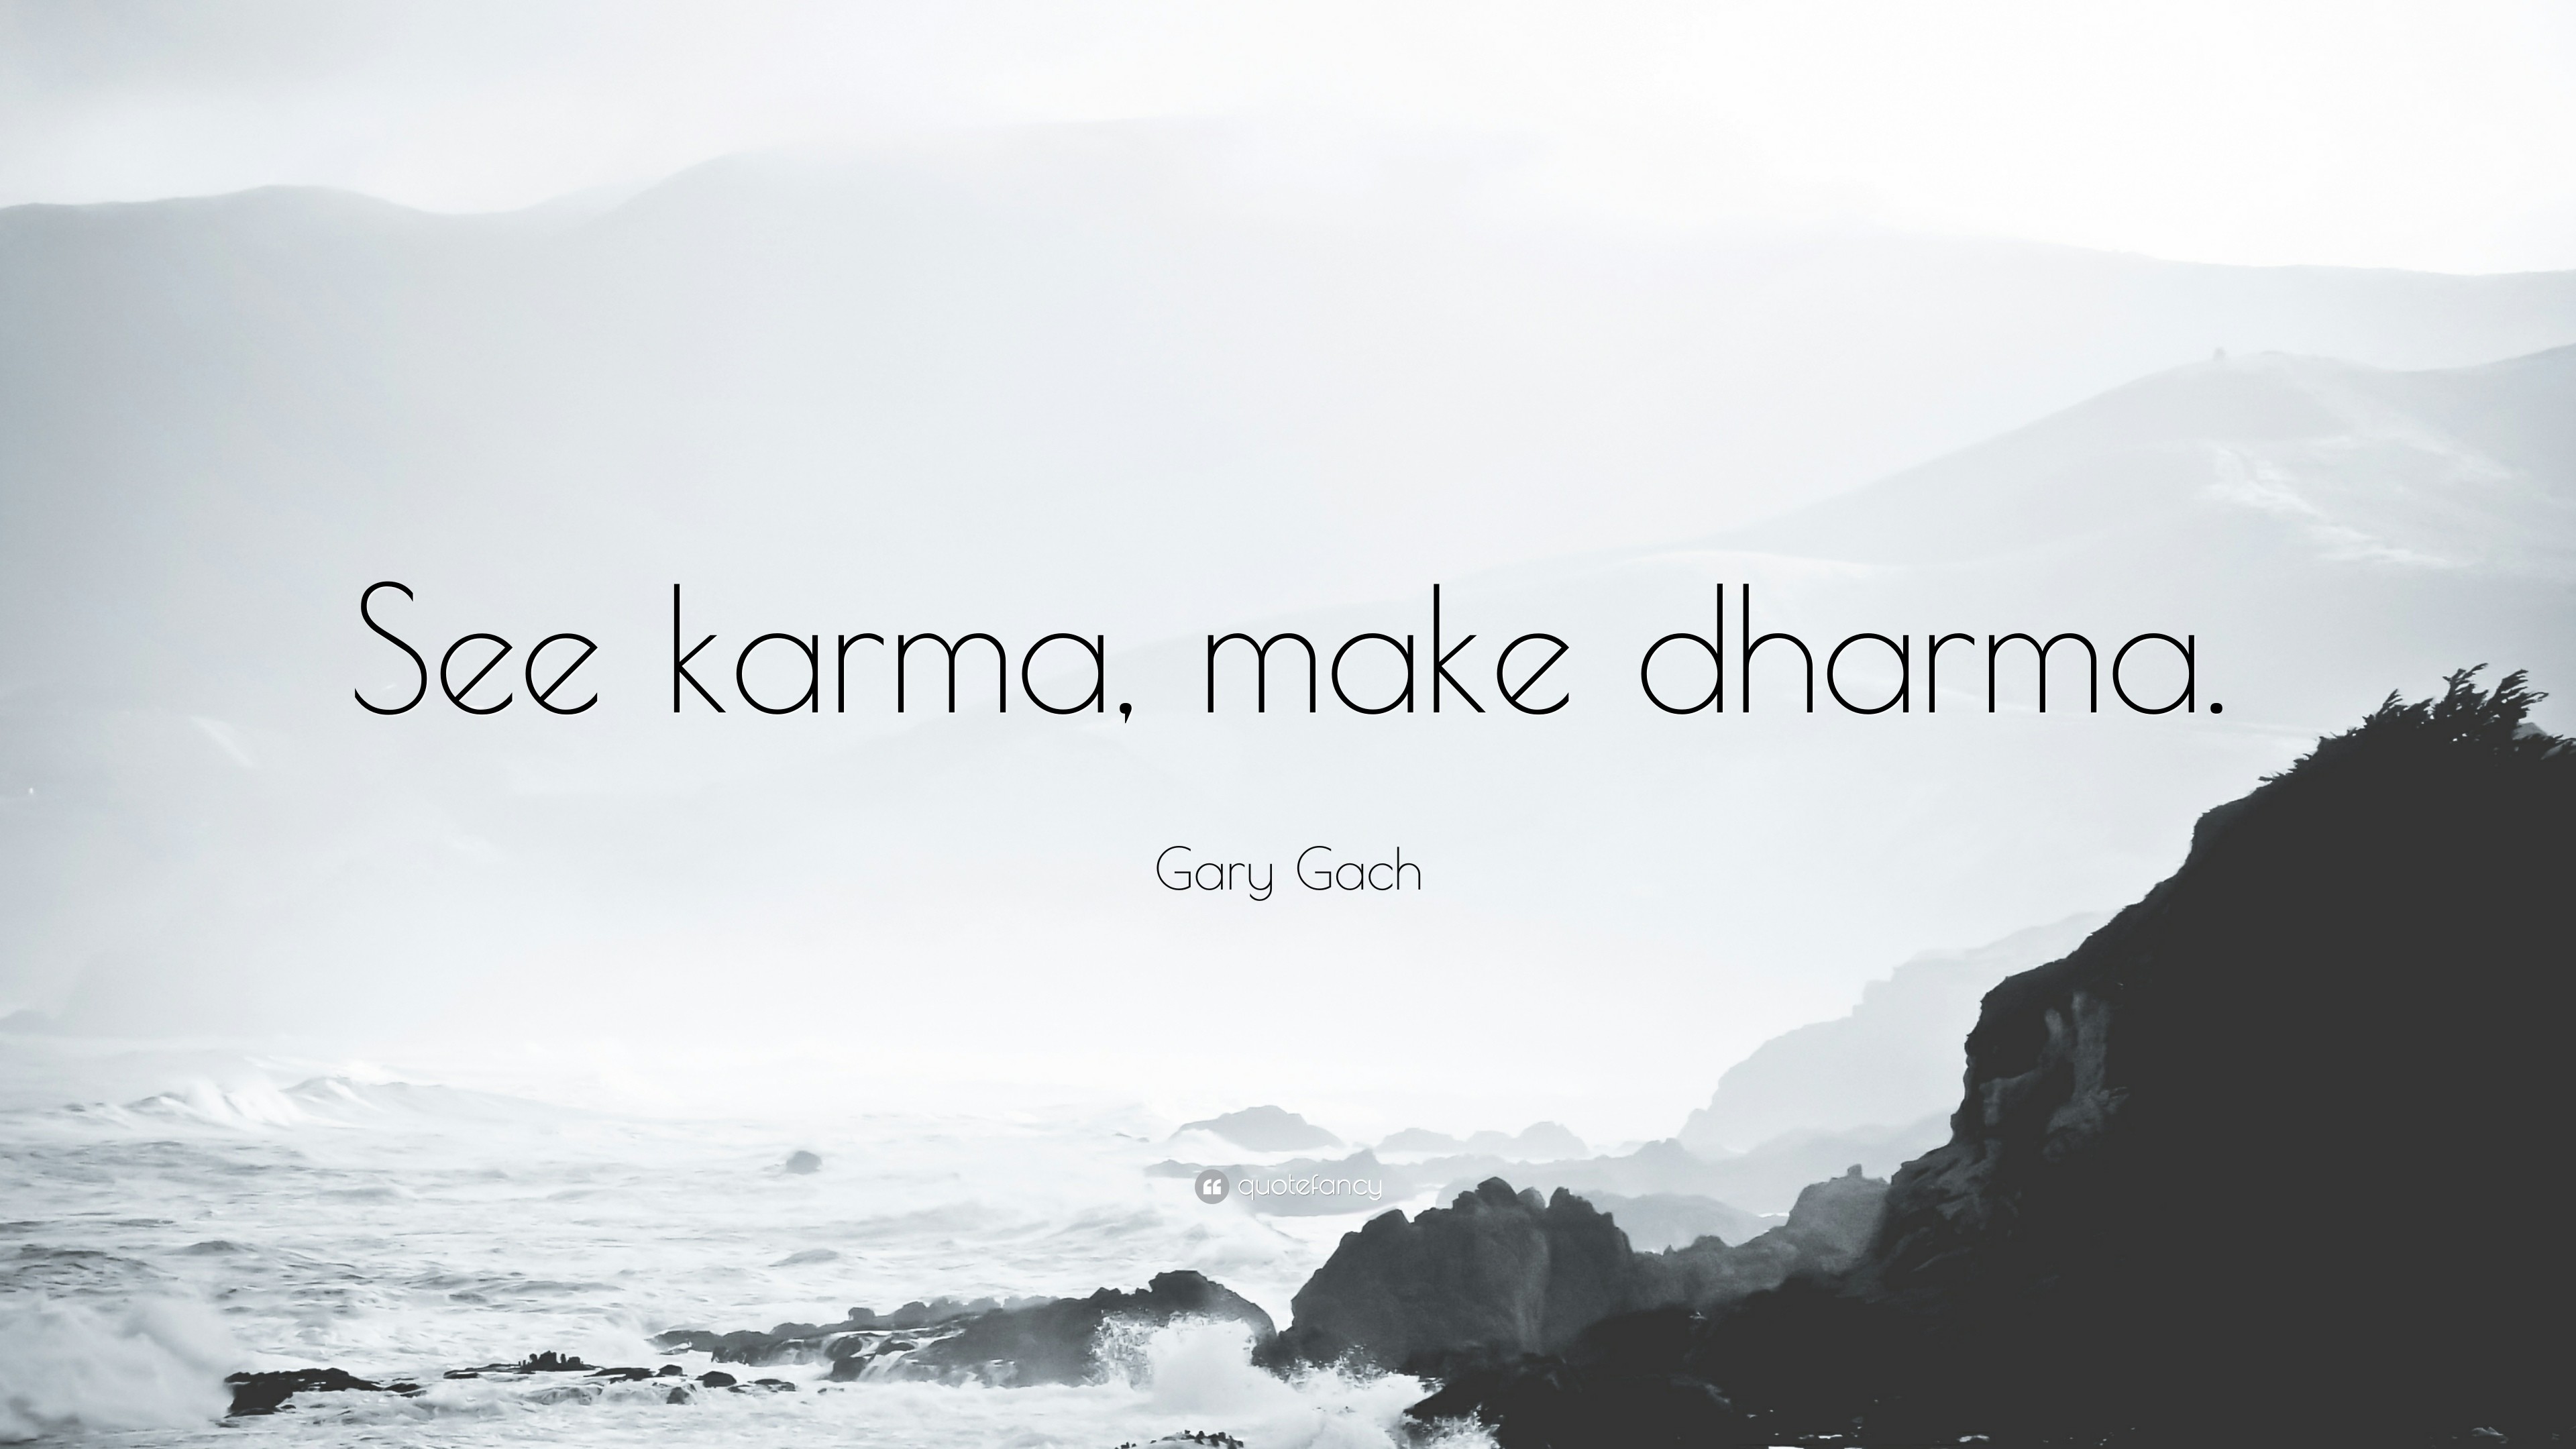 3840x2160 Gary Gach Quote: “See karma, make dharma.”